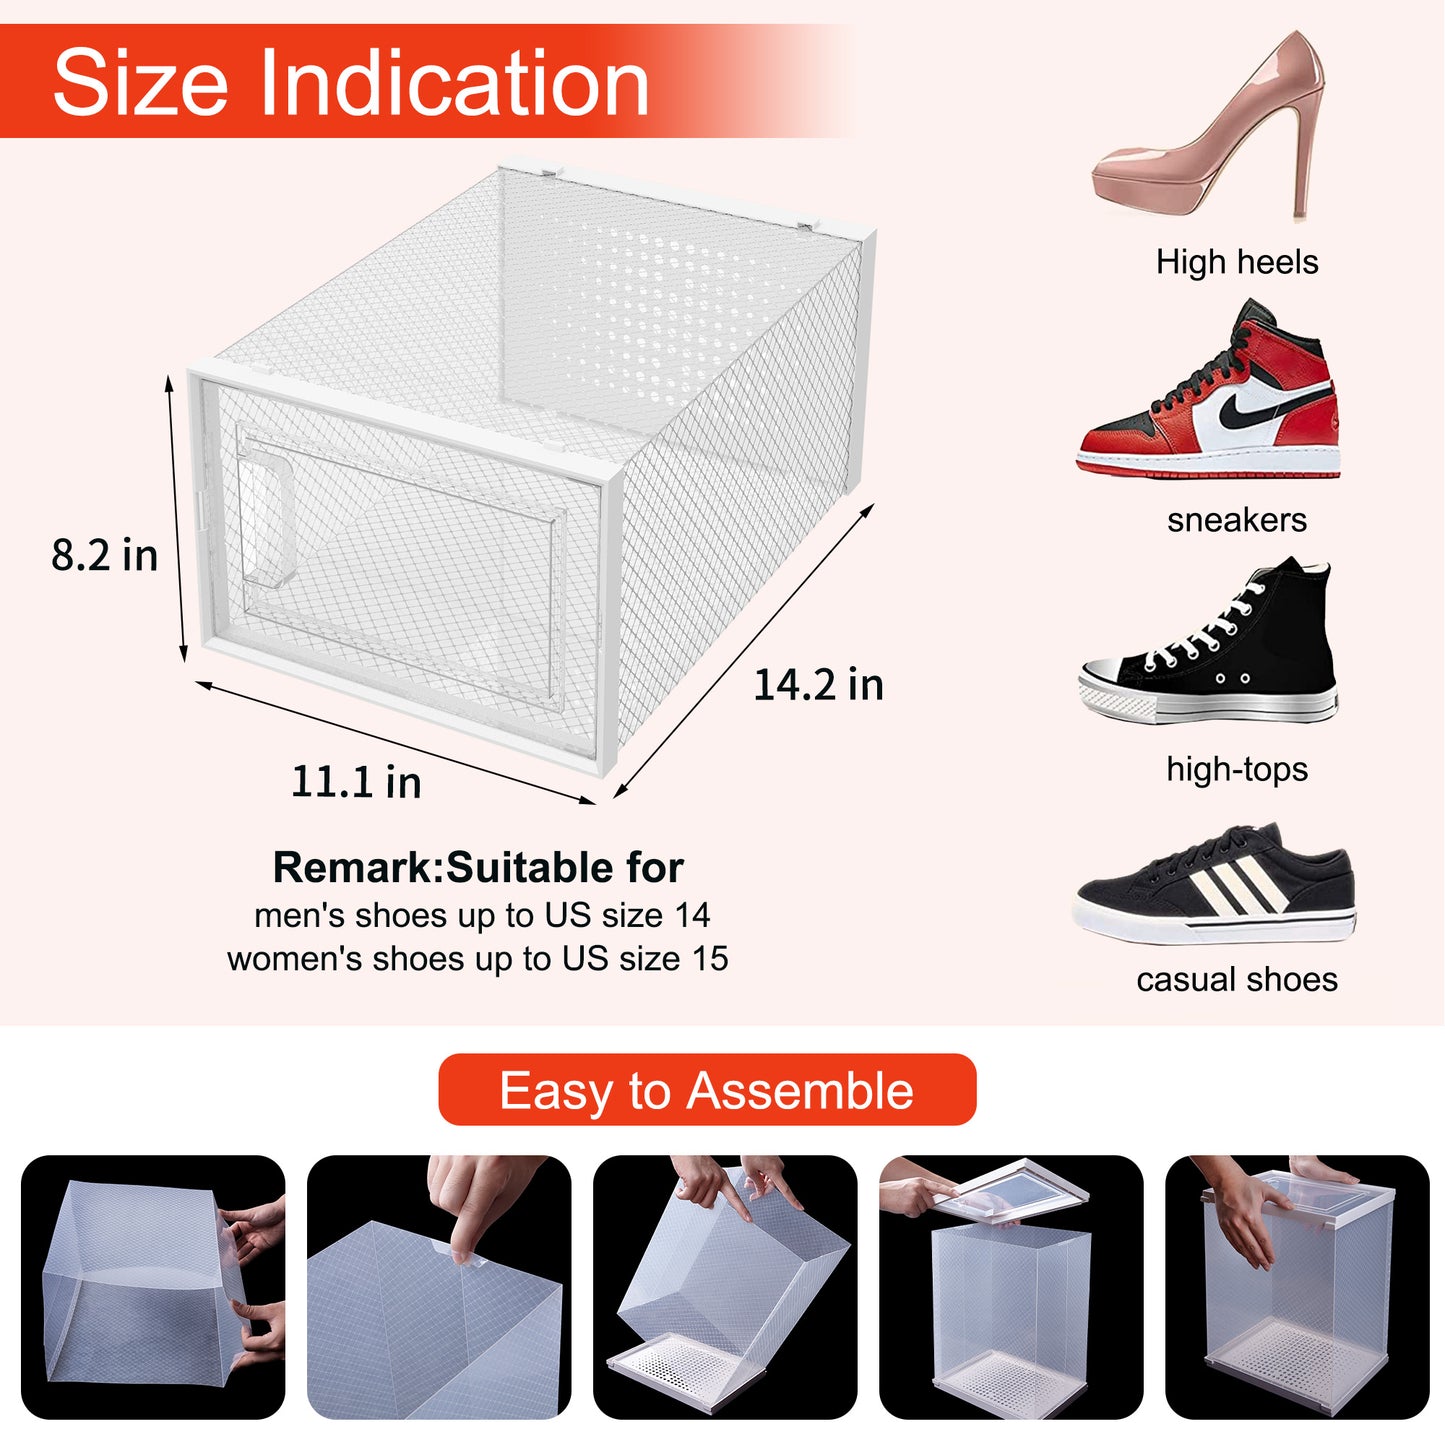 Stackable Shoe Organizer - WAYTRIM Shoe Storage Organizer Shoe Container for Sneaker Sandal Shoe Boxes Fit to Women Size 11